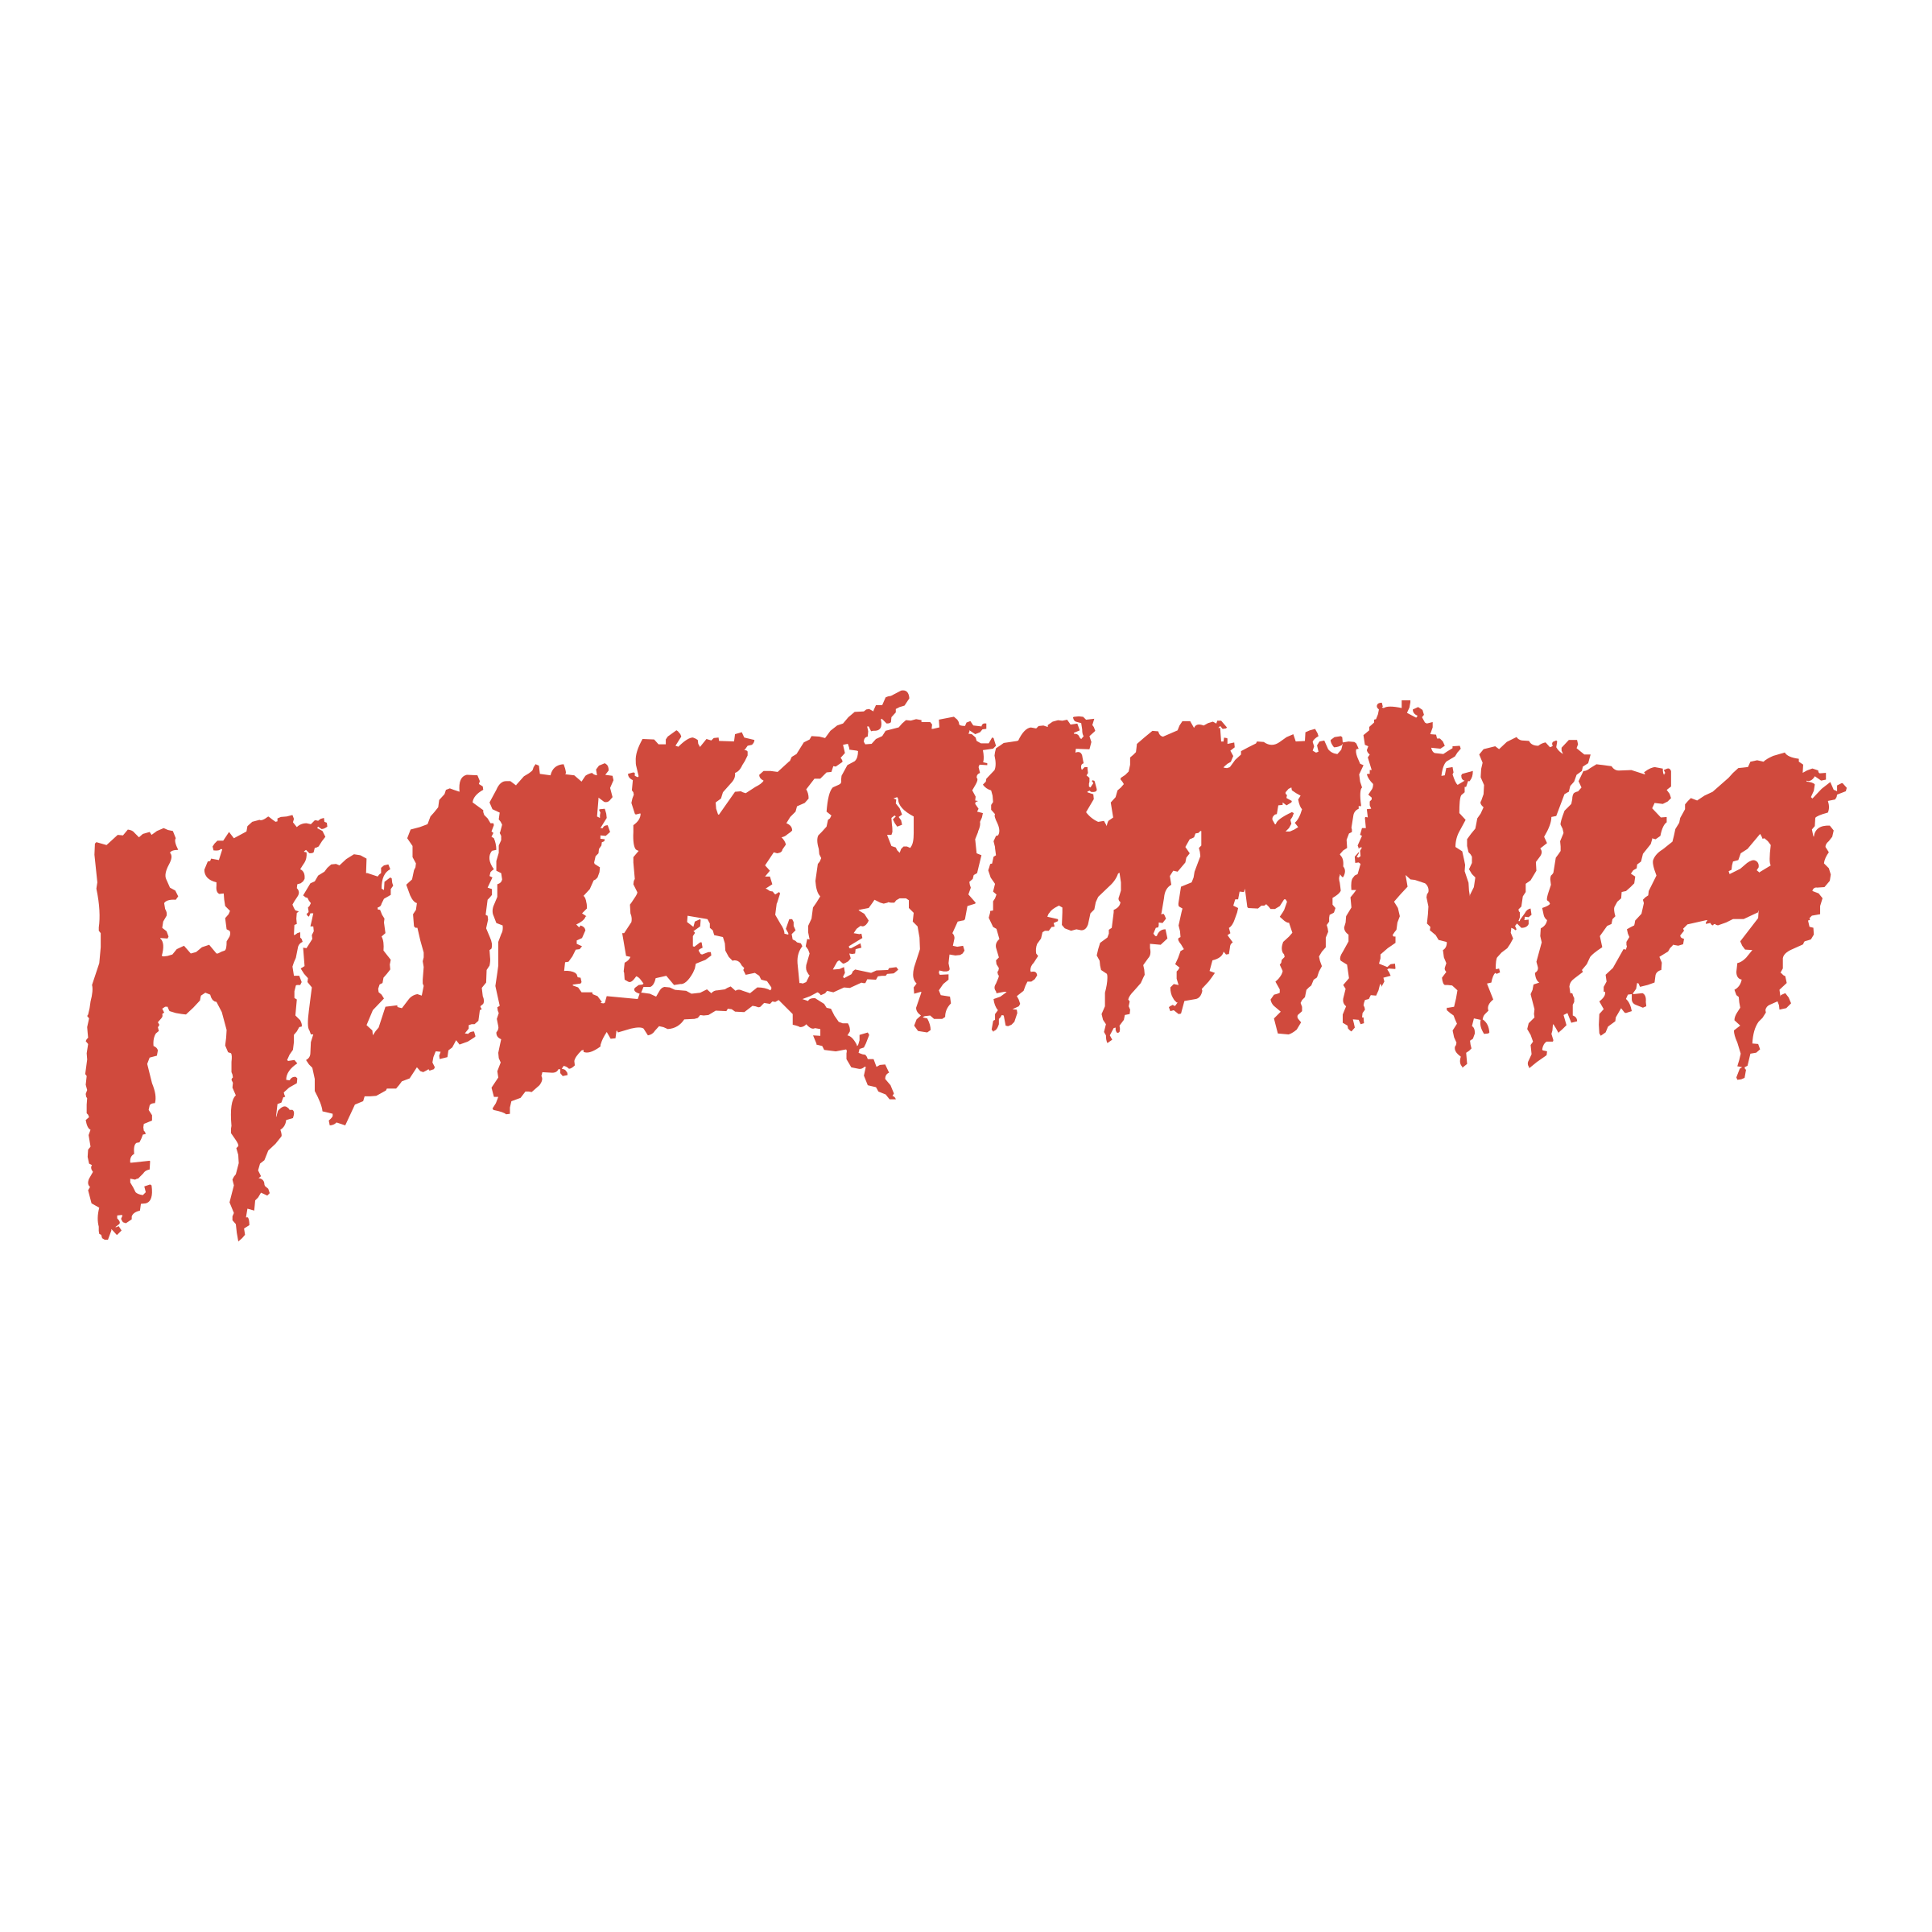 Hulkamania Logo - Hulkamania Logo PNG Transparent & SVG Vector - Freebie Supply